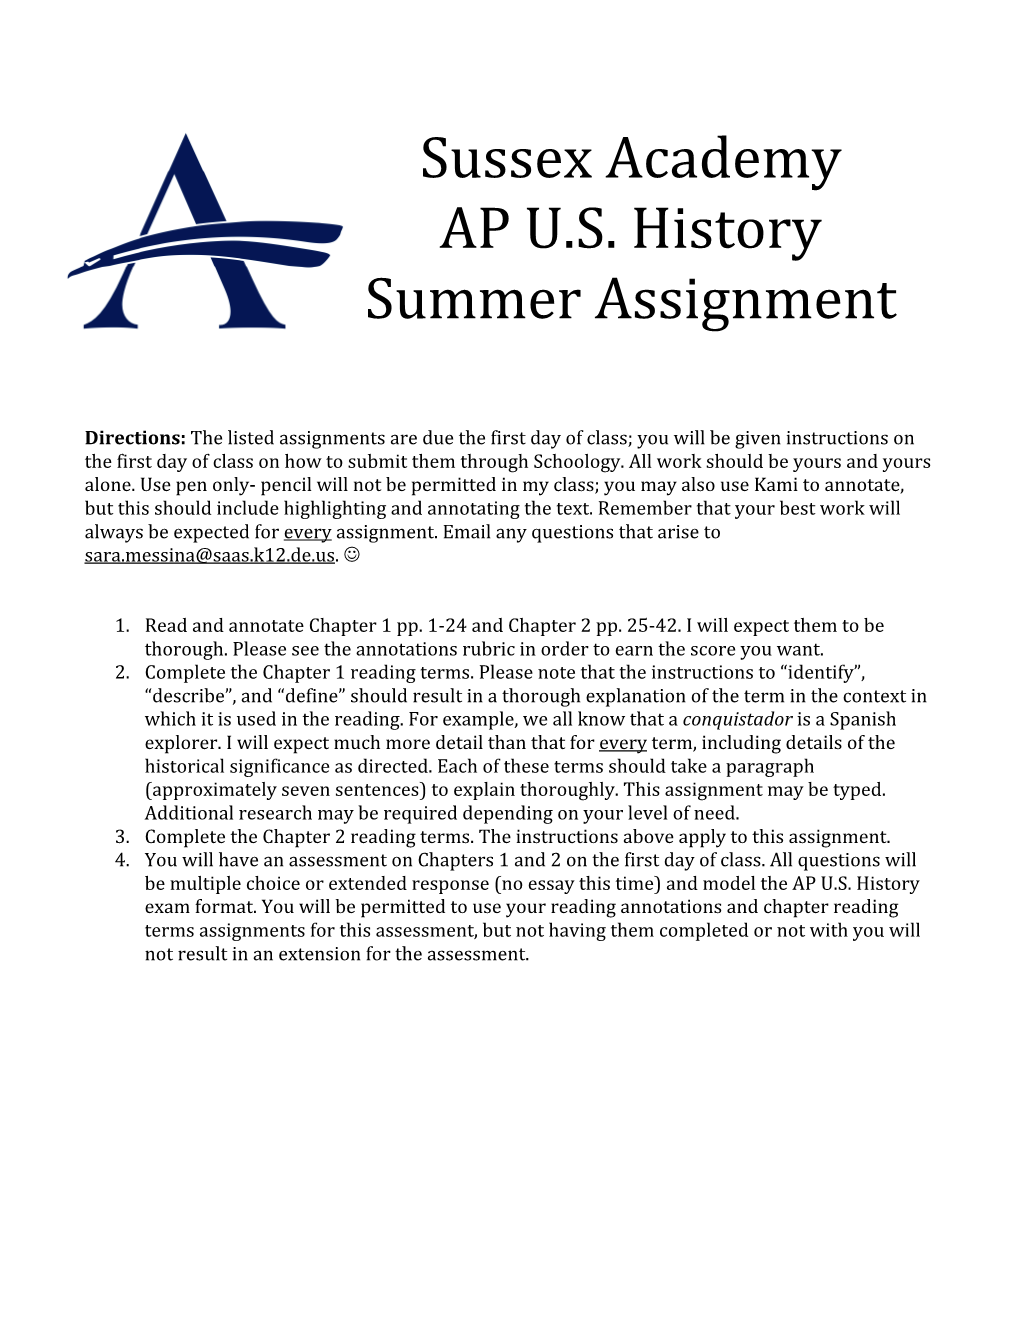 Sussex Academy AP U.S. History Summer Assignment